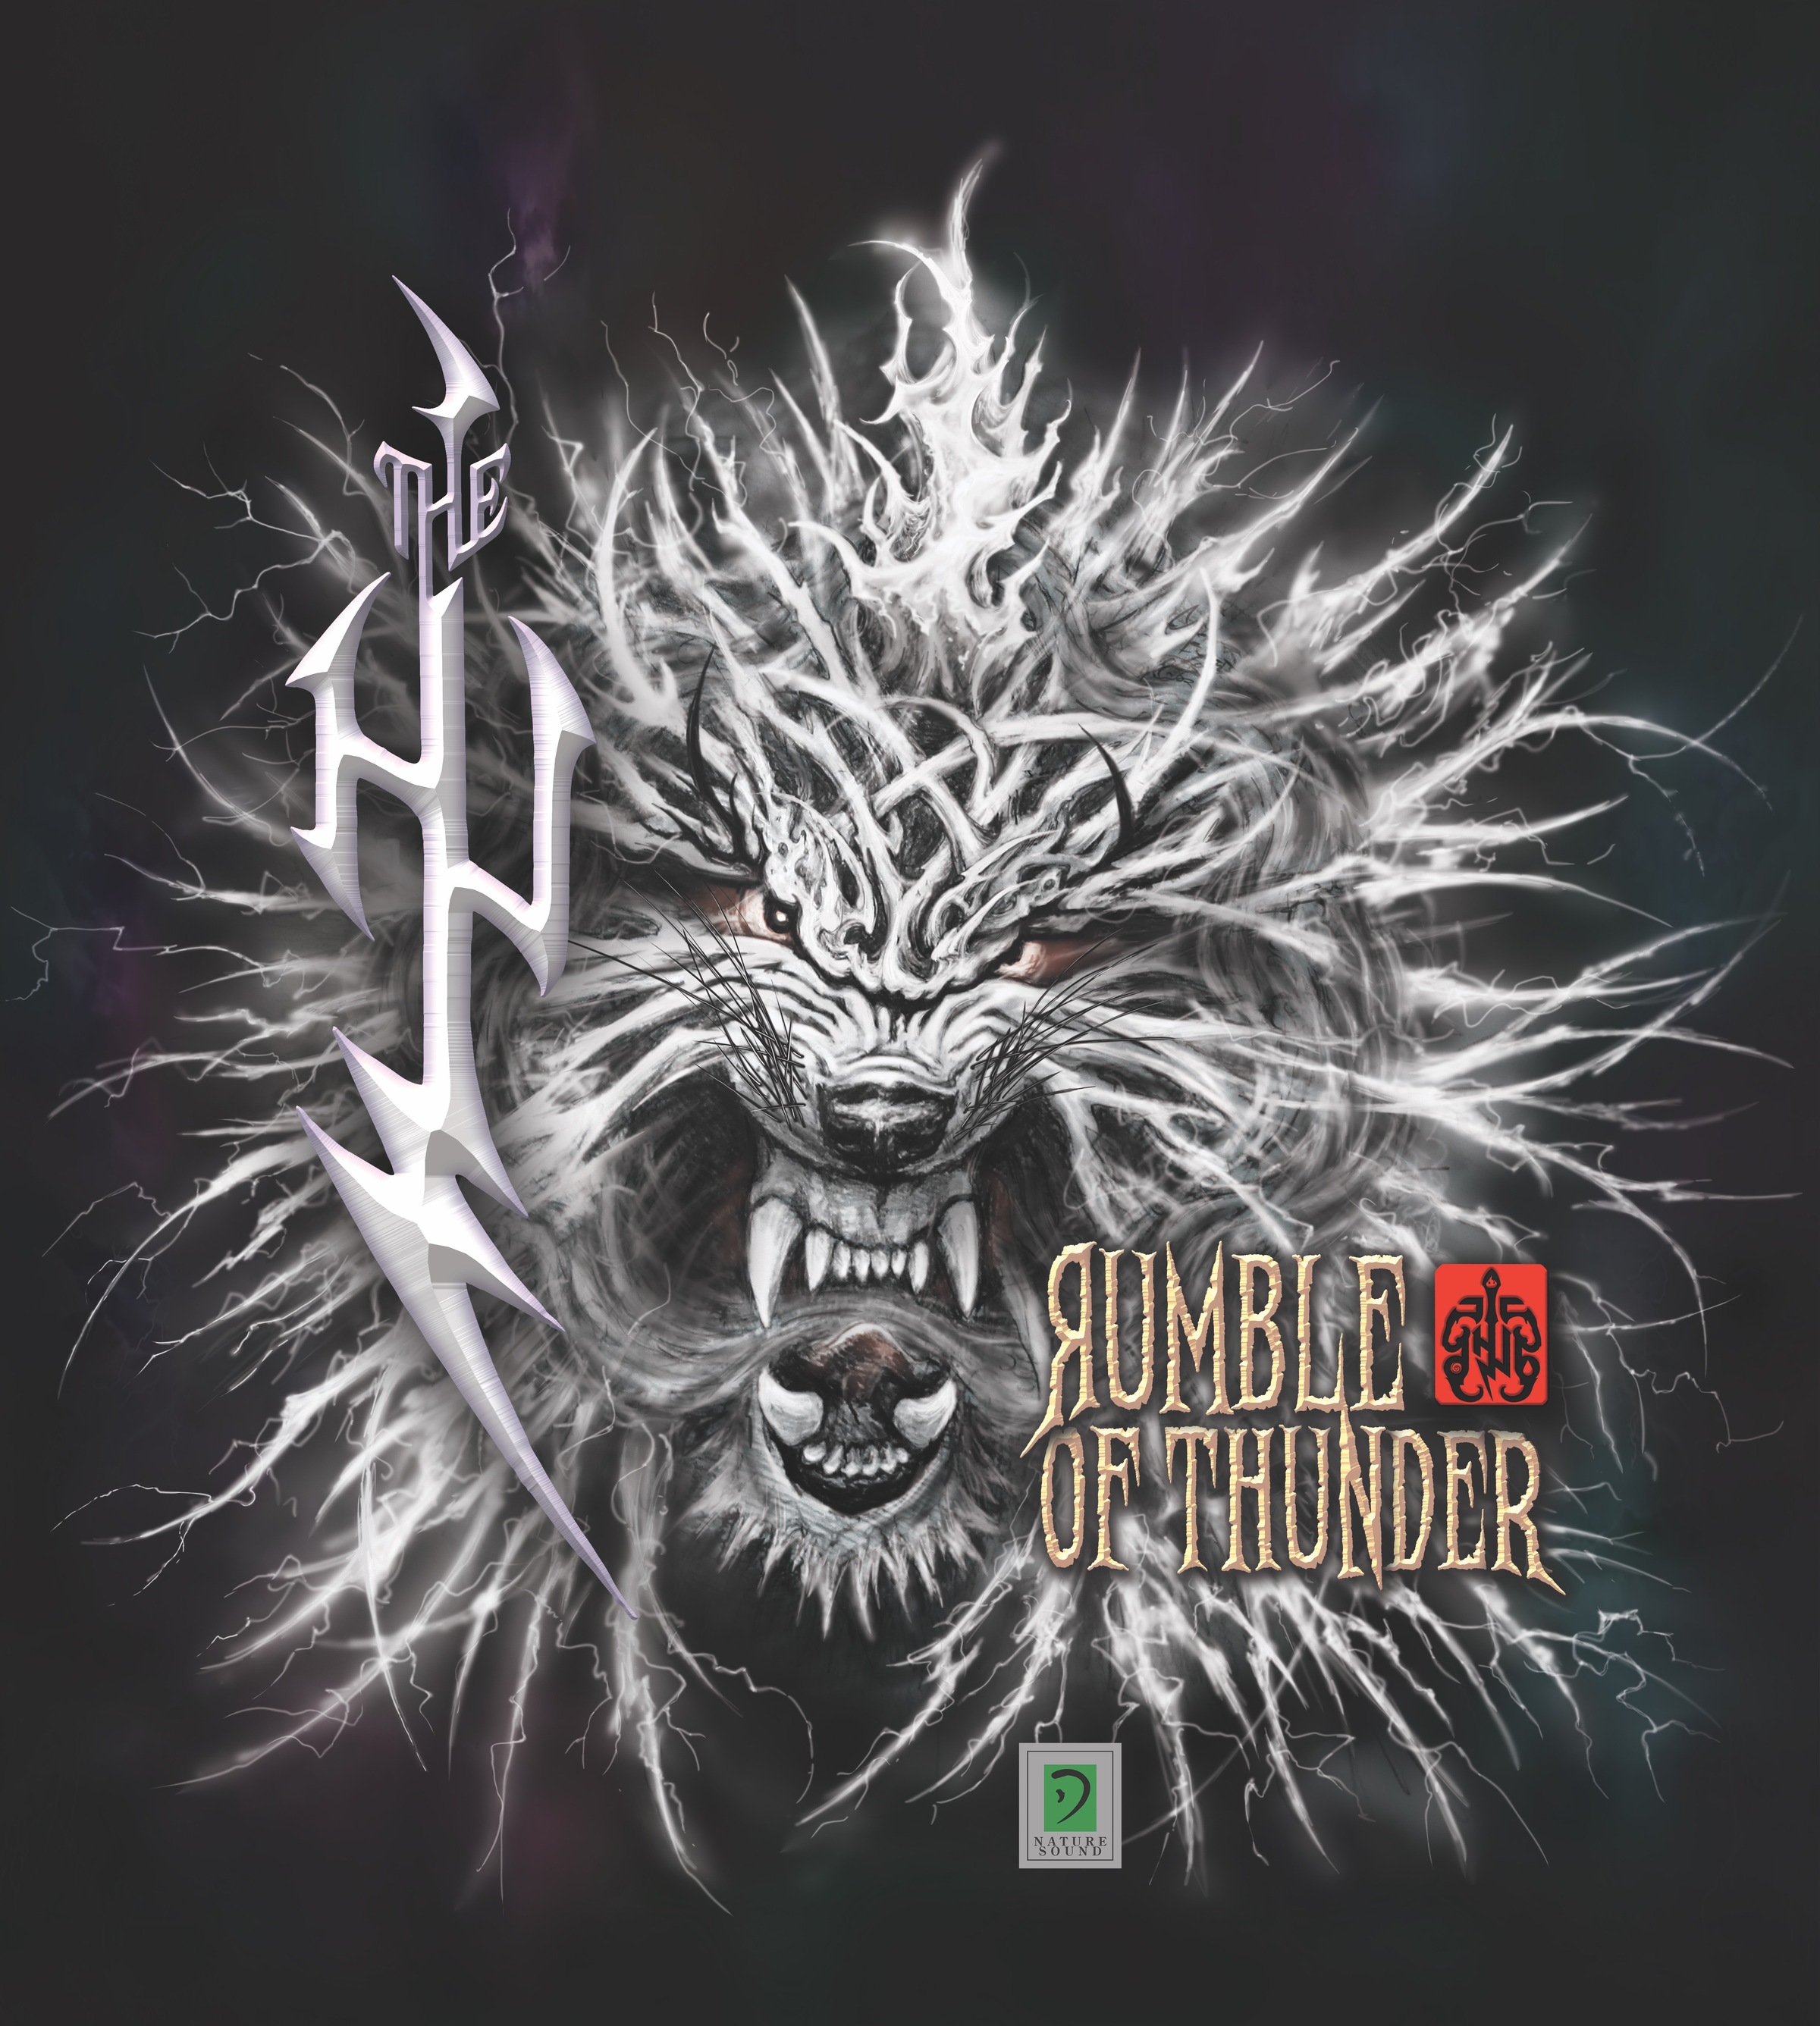 The HU Rumble of Thunder cover artwork